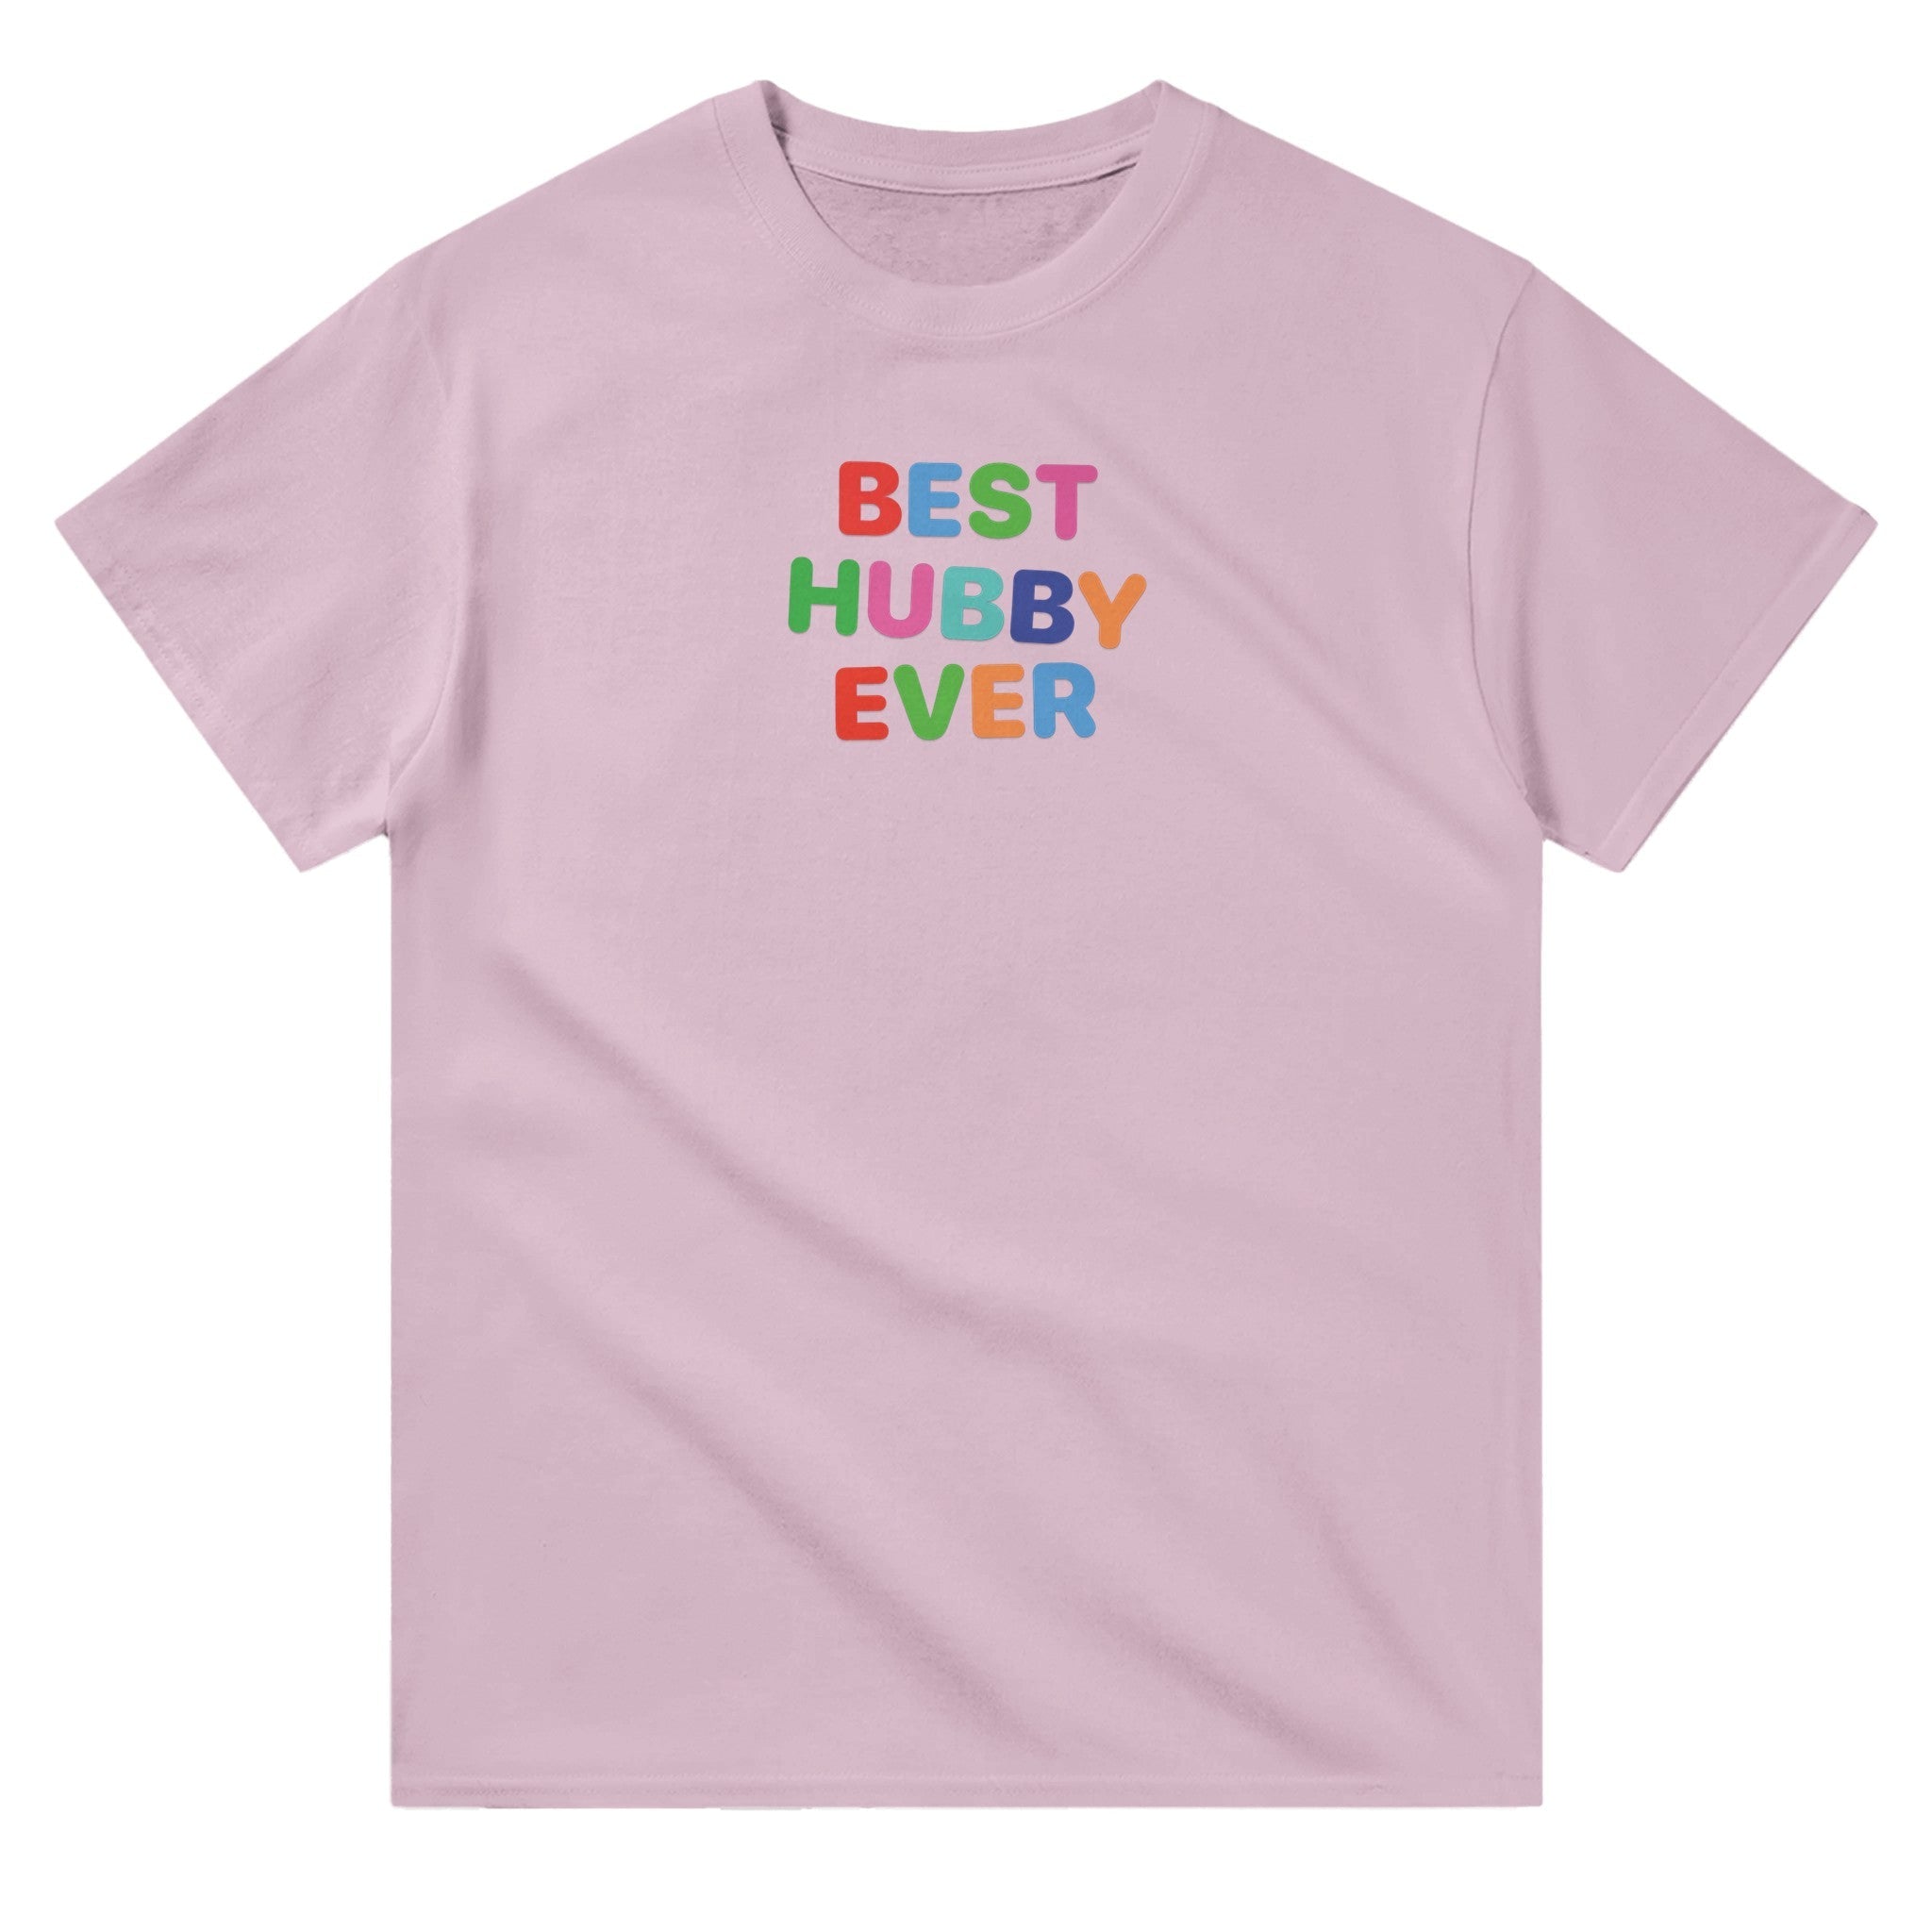 'Best Hubby Ever' classic tee - In Print We Trust